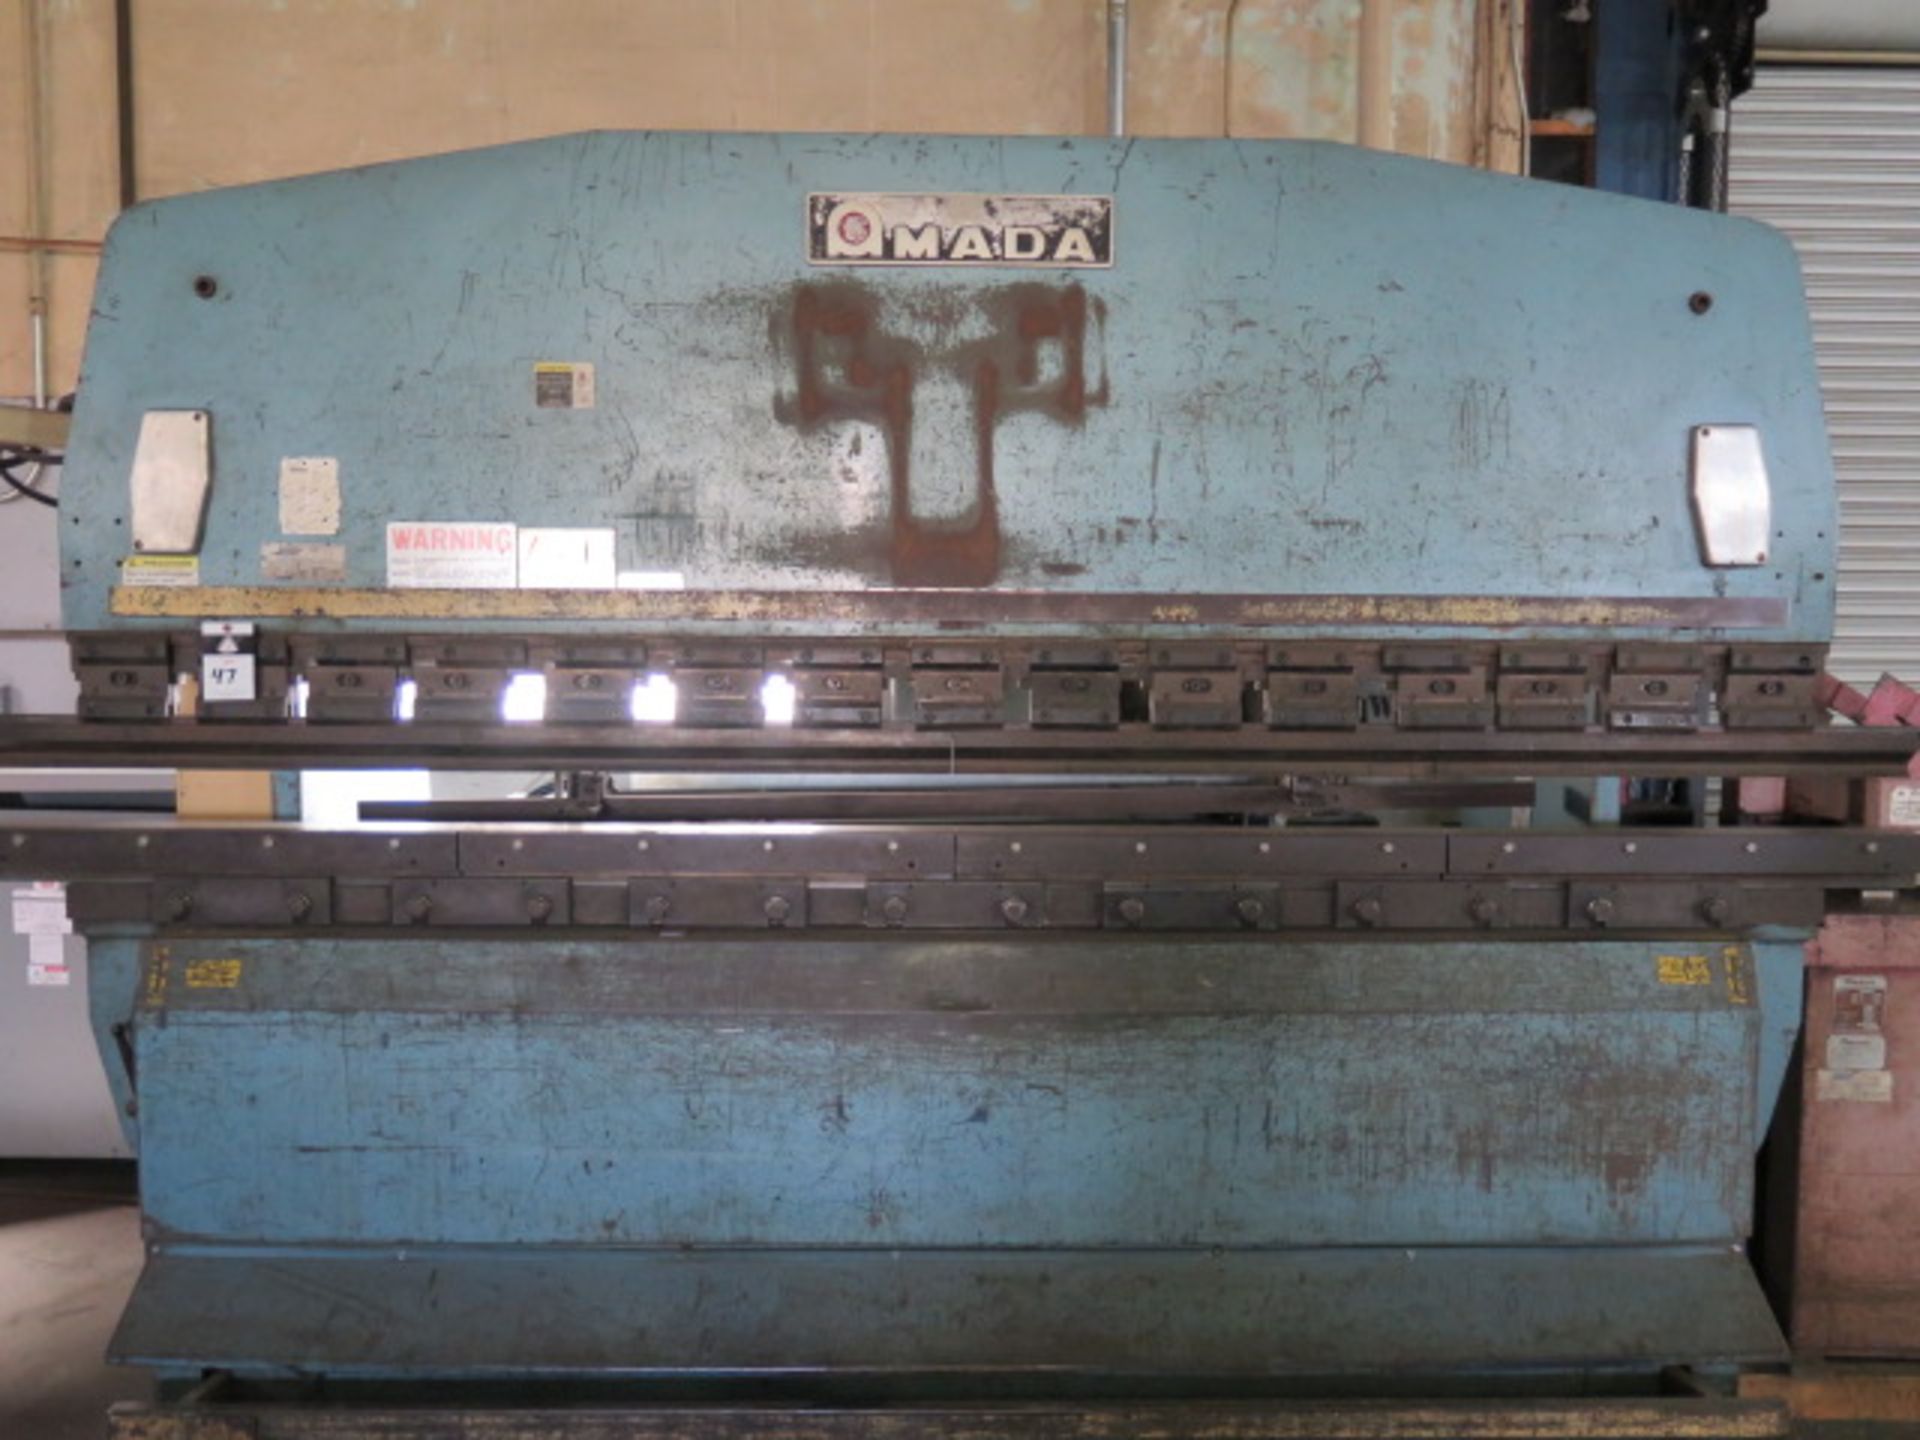 Amada RG-100 100 Ton x 10’ CNC Press Brake, w/ Amada Auto-Backgauge Controls, 118” Bed, SOLD AS IS